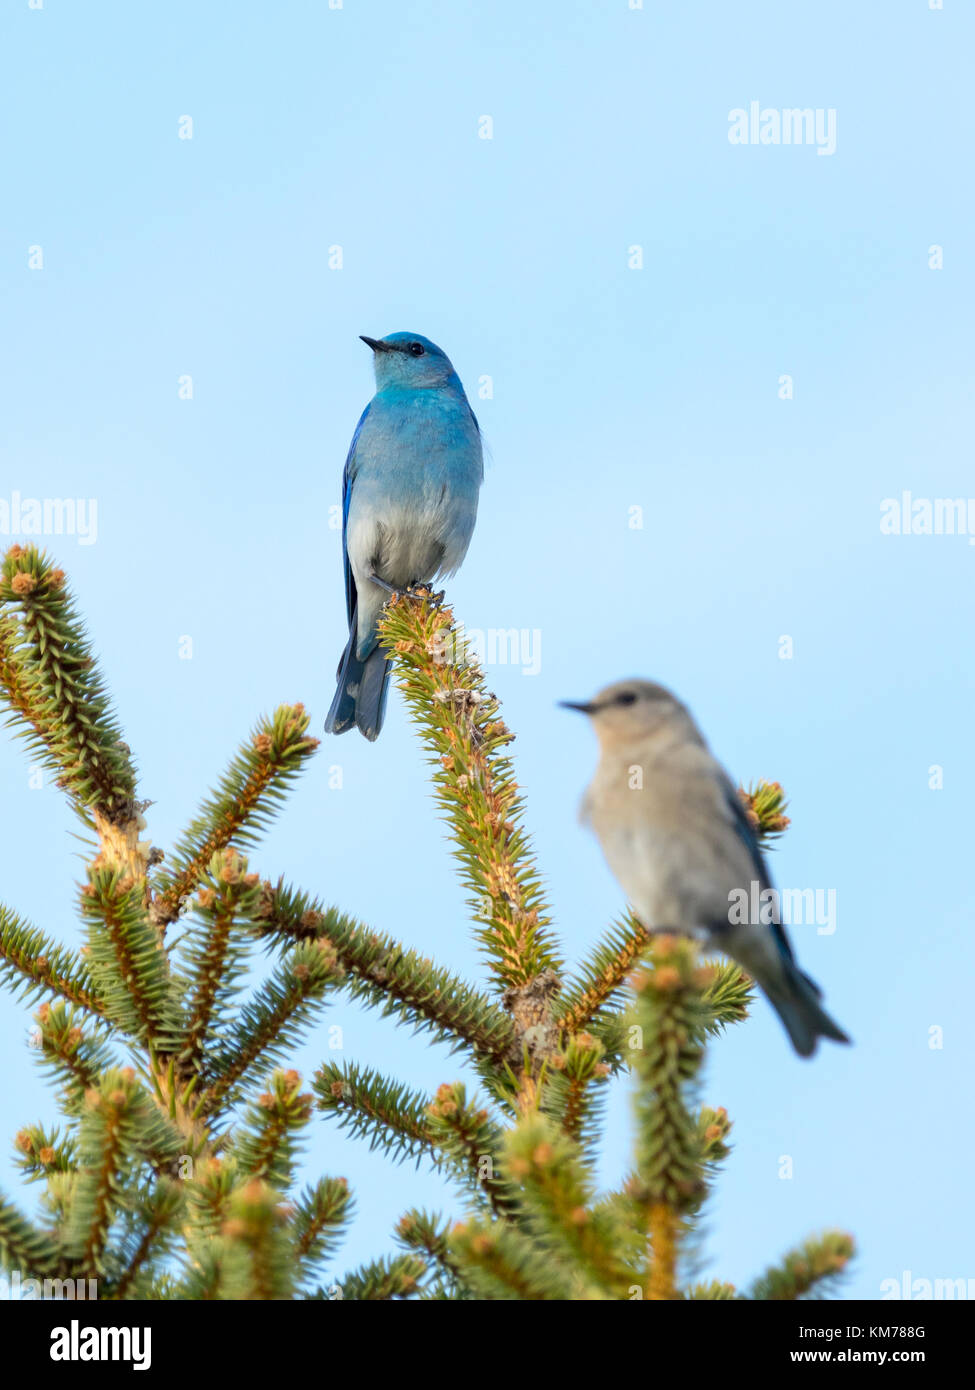 A breeding pair of Mountain bluebirds (Sialia currucoides), with selective focus on the male bird.  Near Tofield, Alberta, Canada. Stock Photo